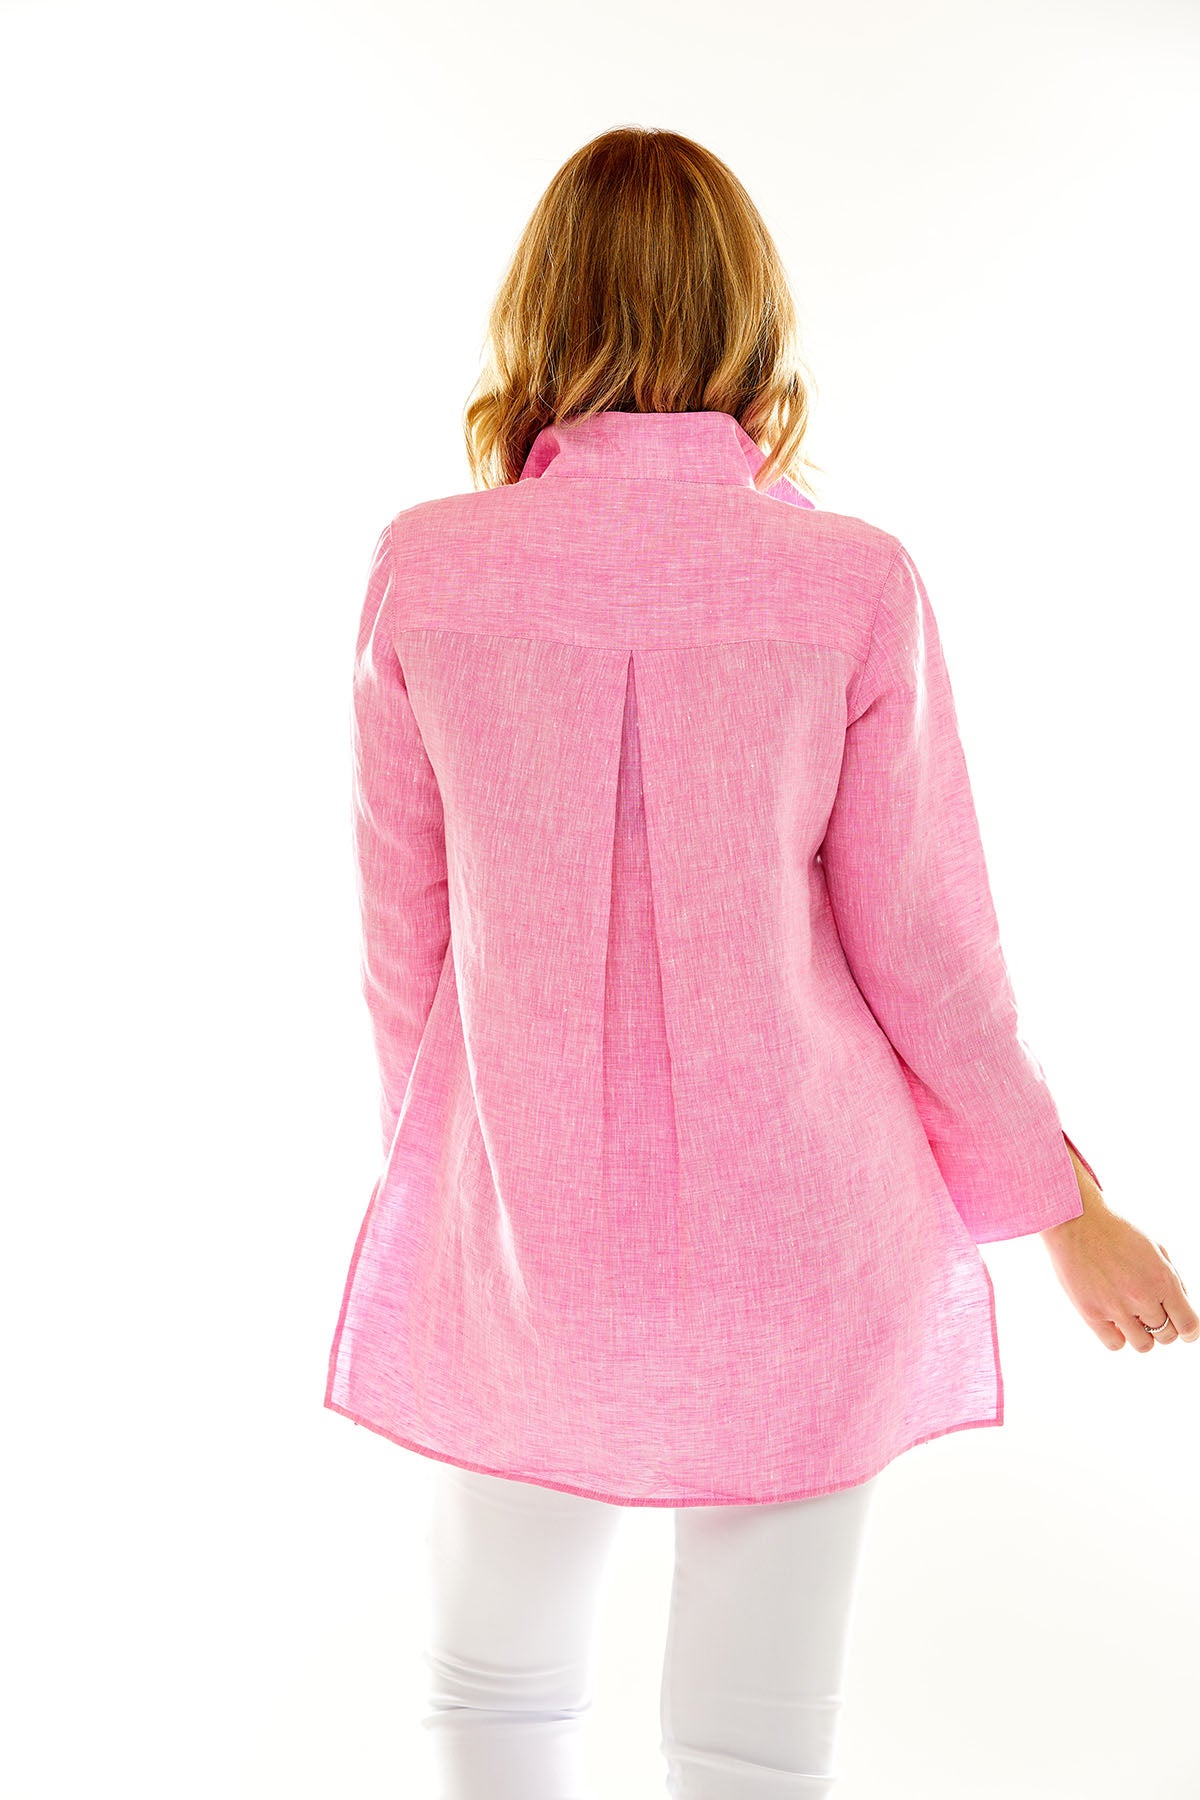 Woman in pink tunic